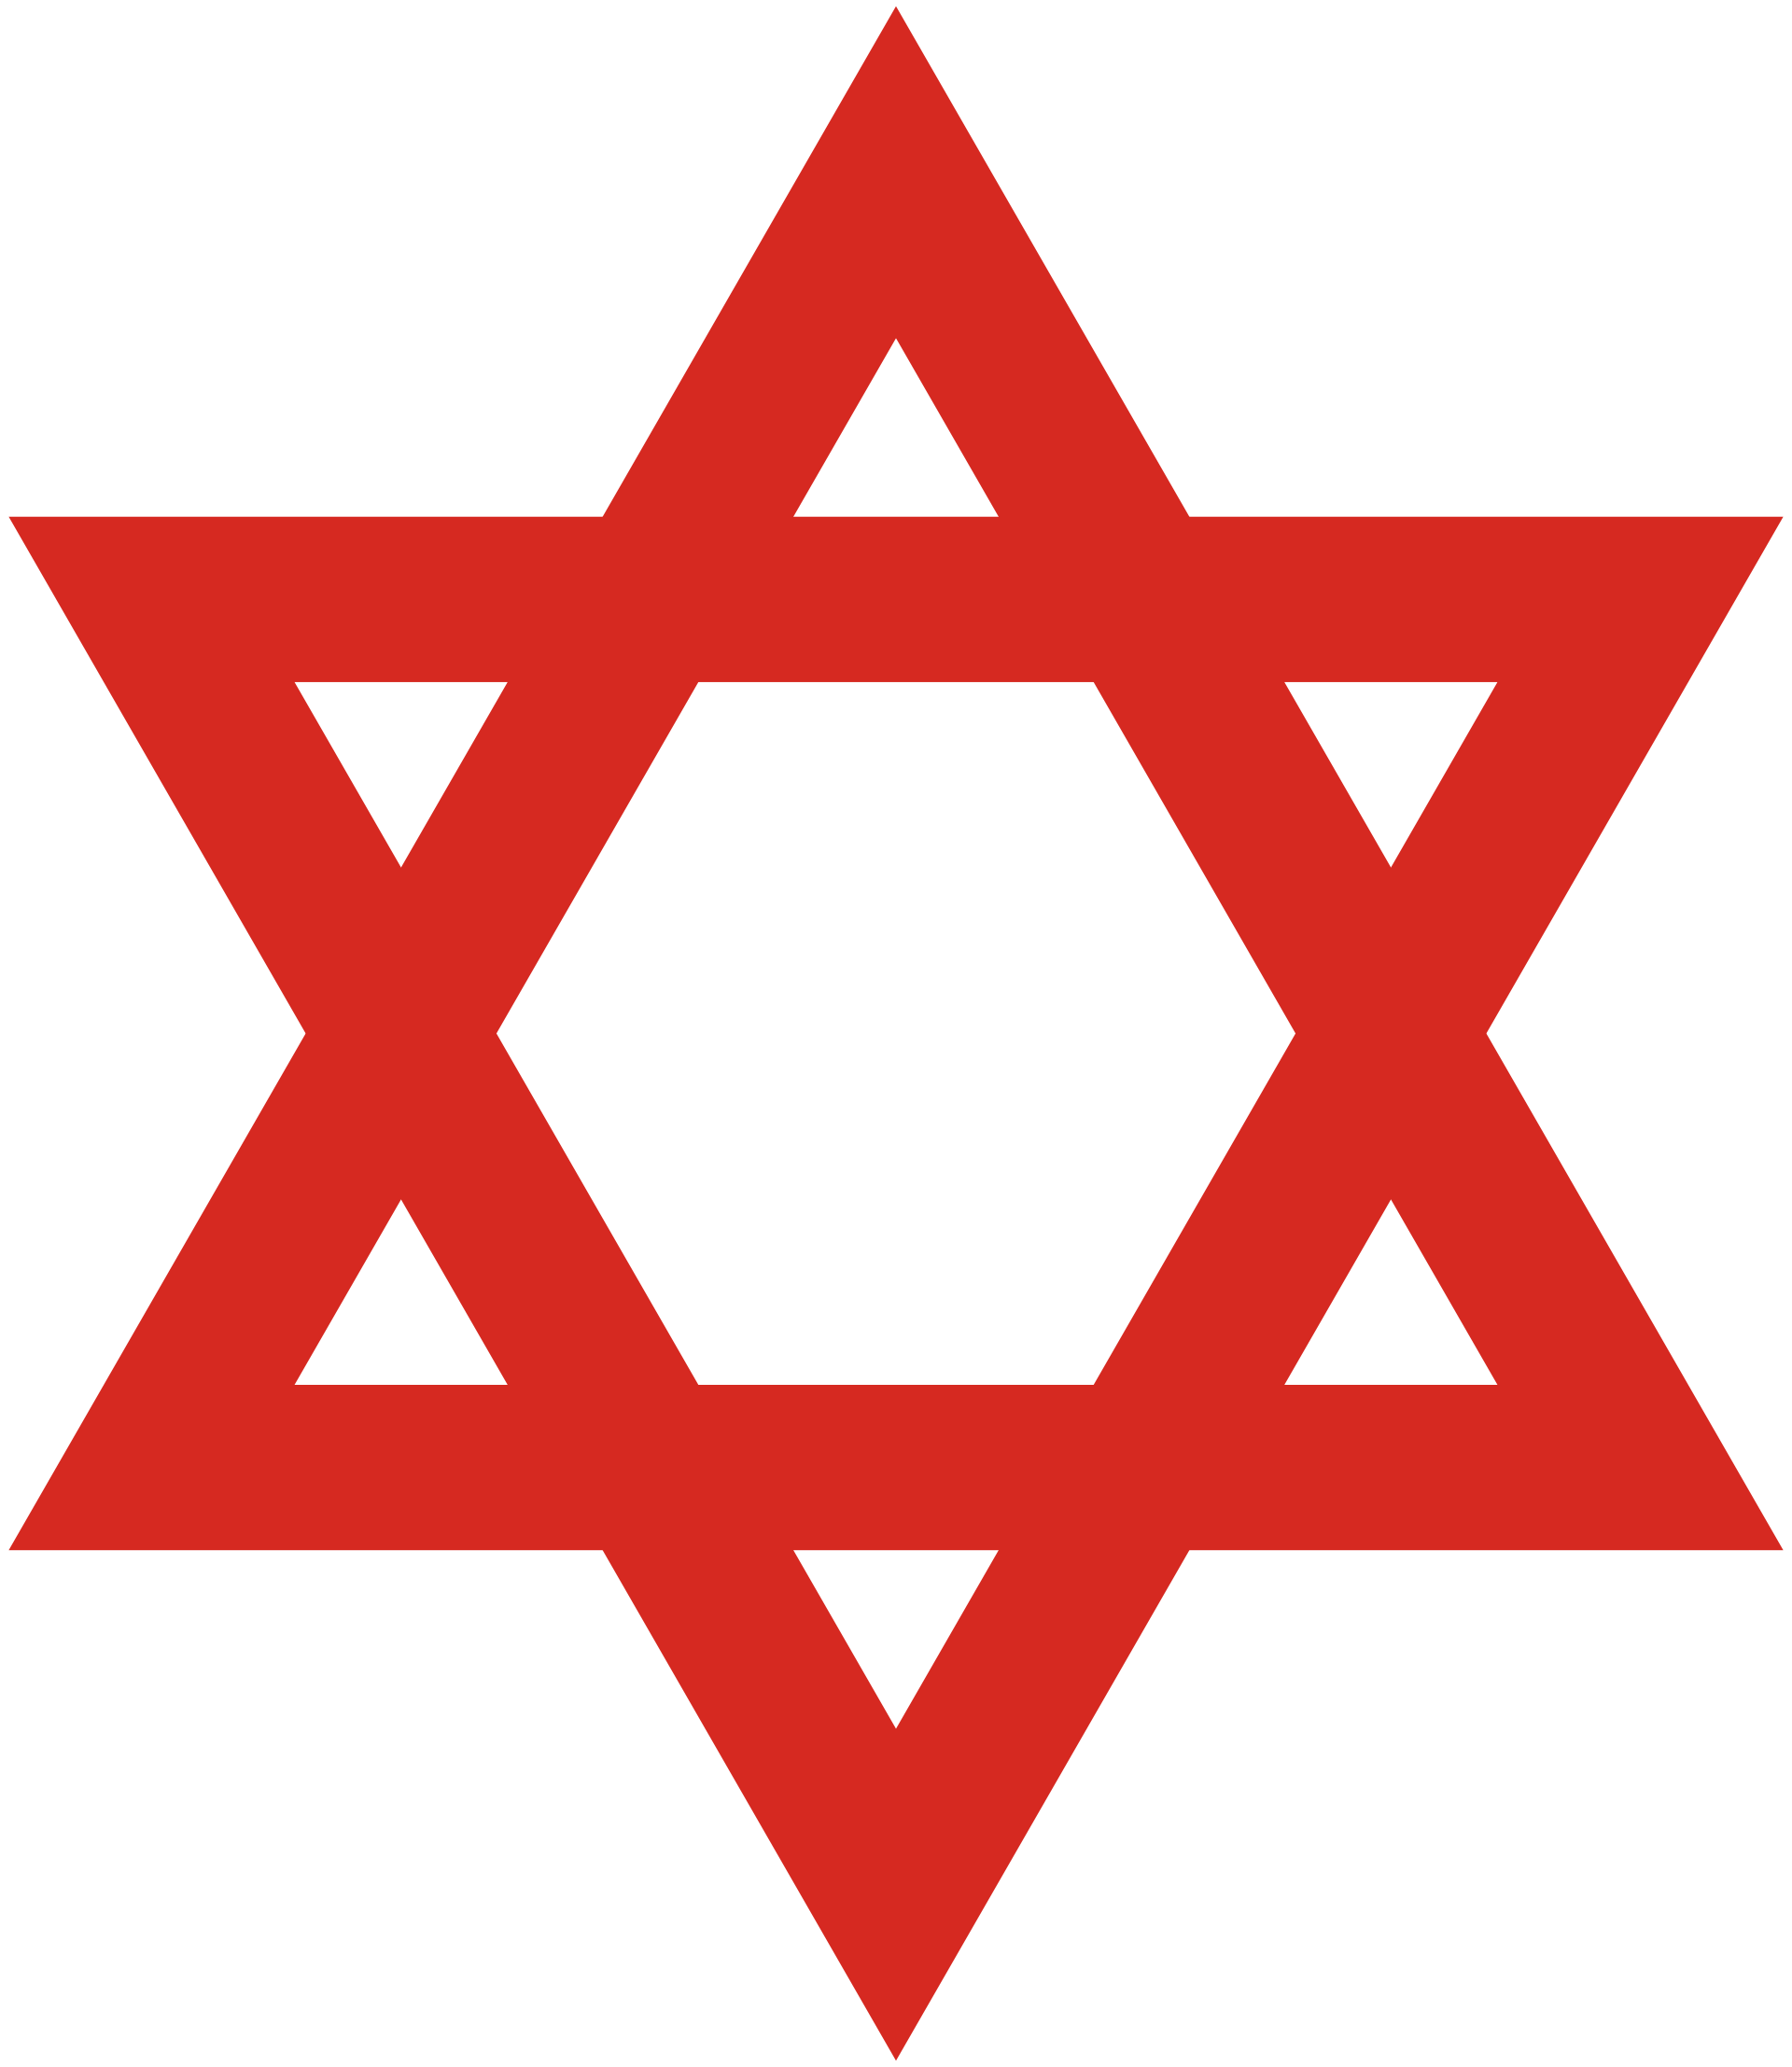 Jewish symbolism - Wikipedia